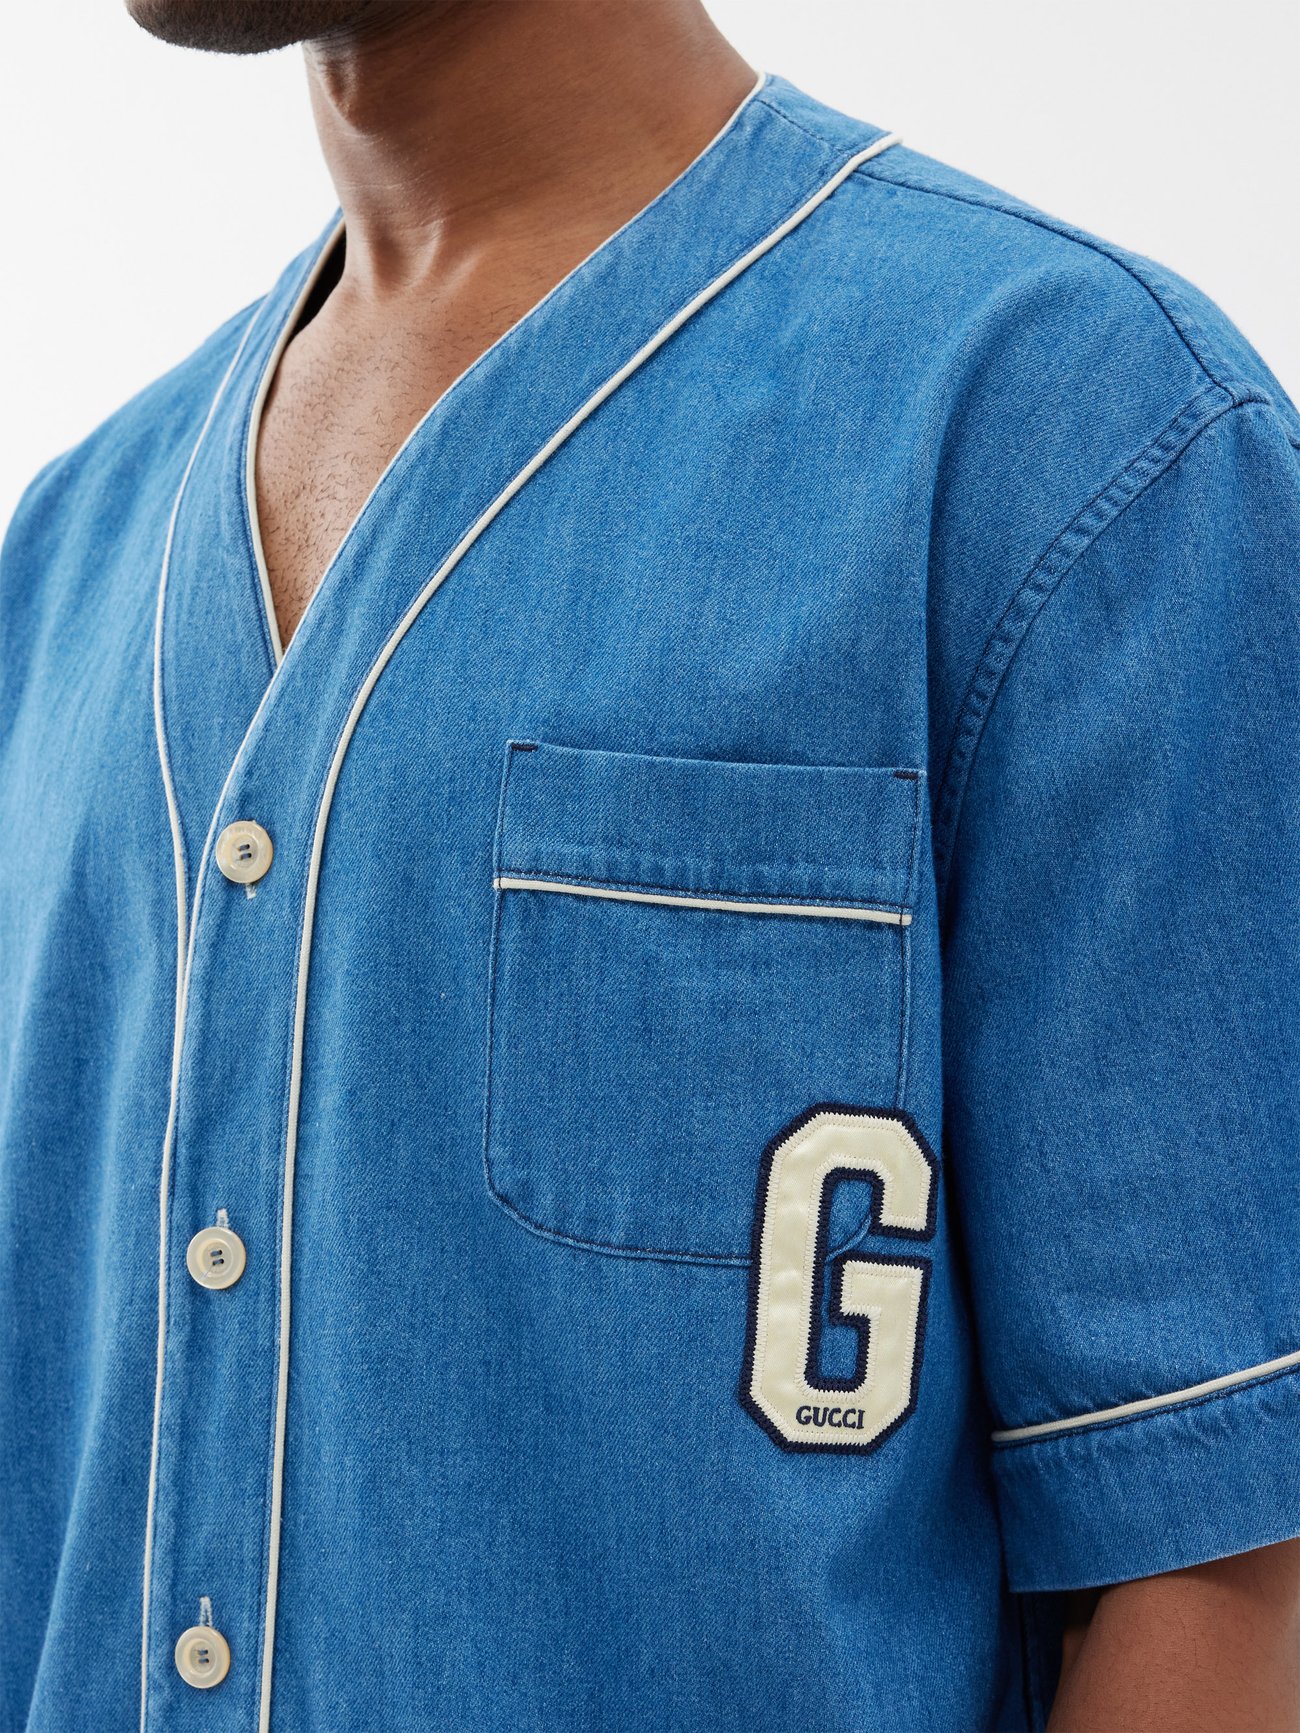 Blue G-appliqué denim shirt, Gucci